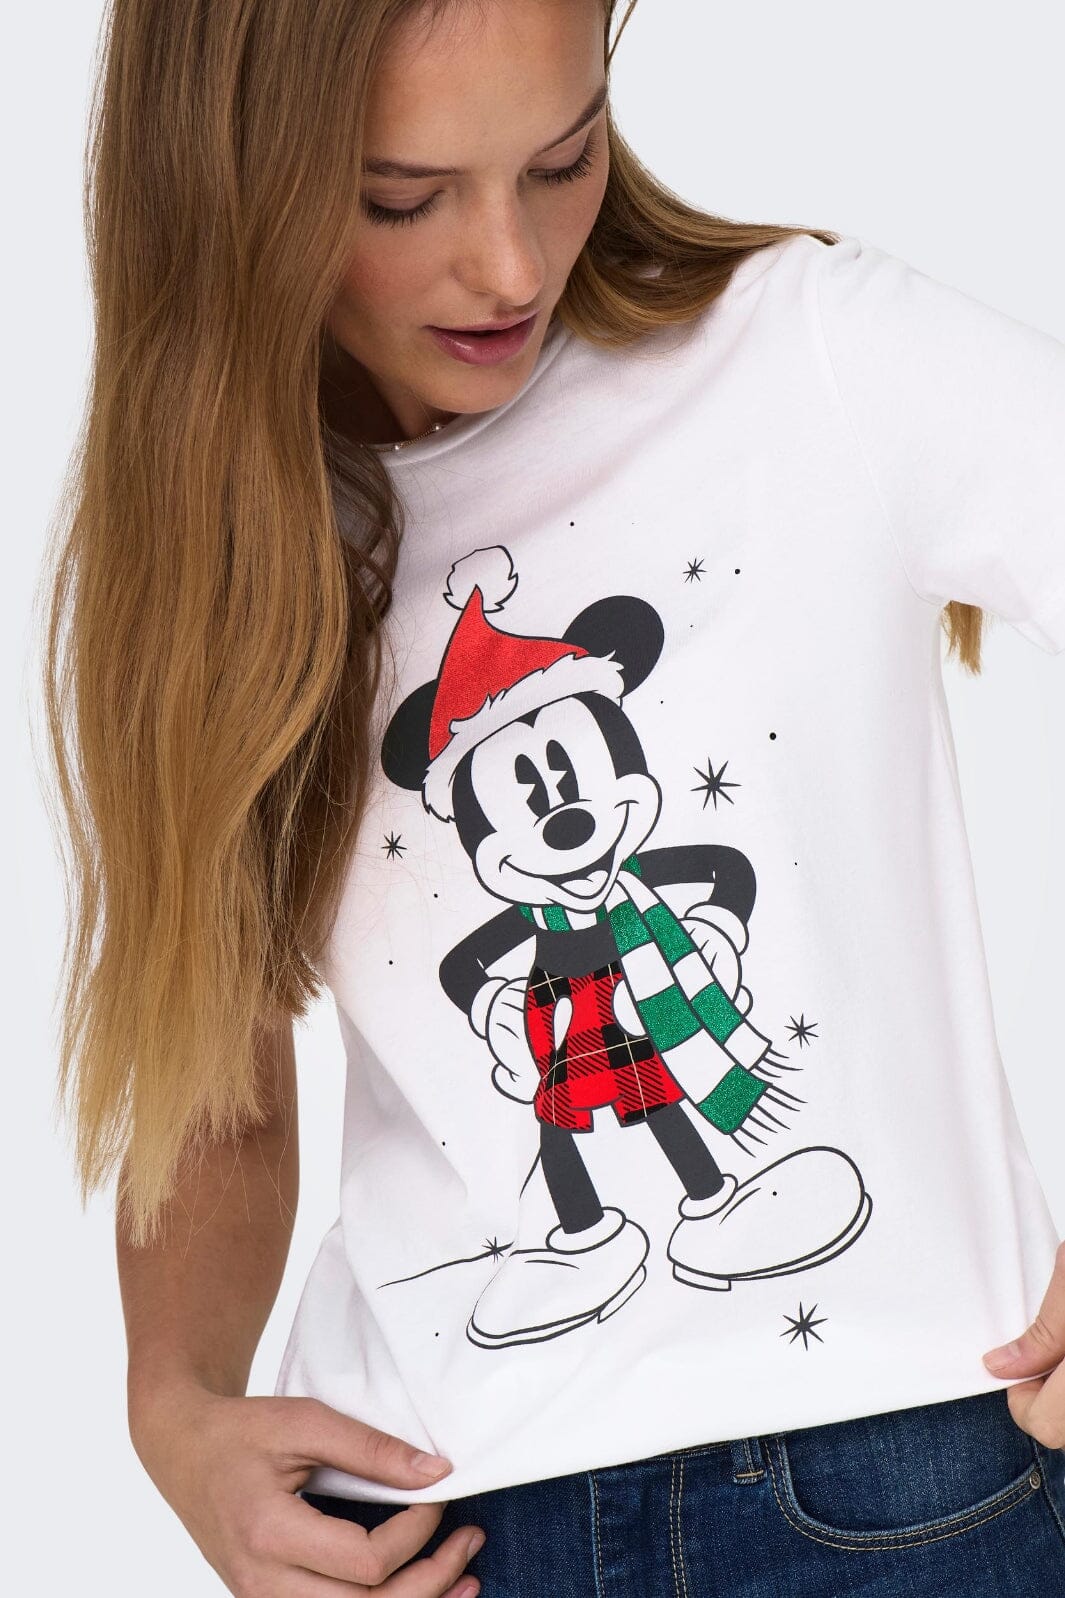 Only - Onldisney Christmas S/S Top Box - 4337611 Bright White Mickey T-shirts 